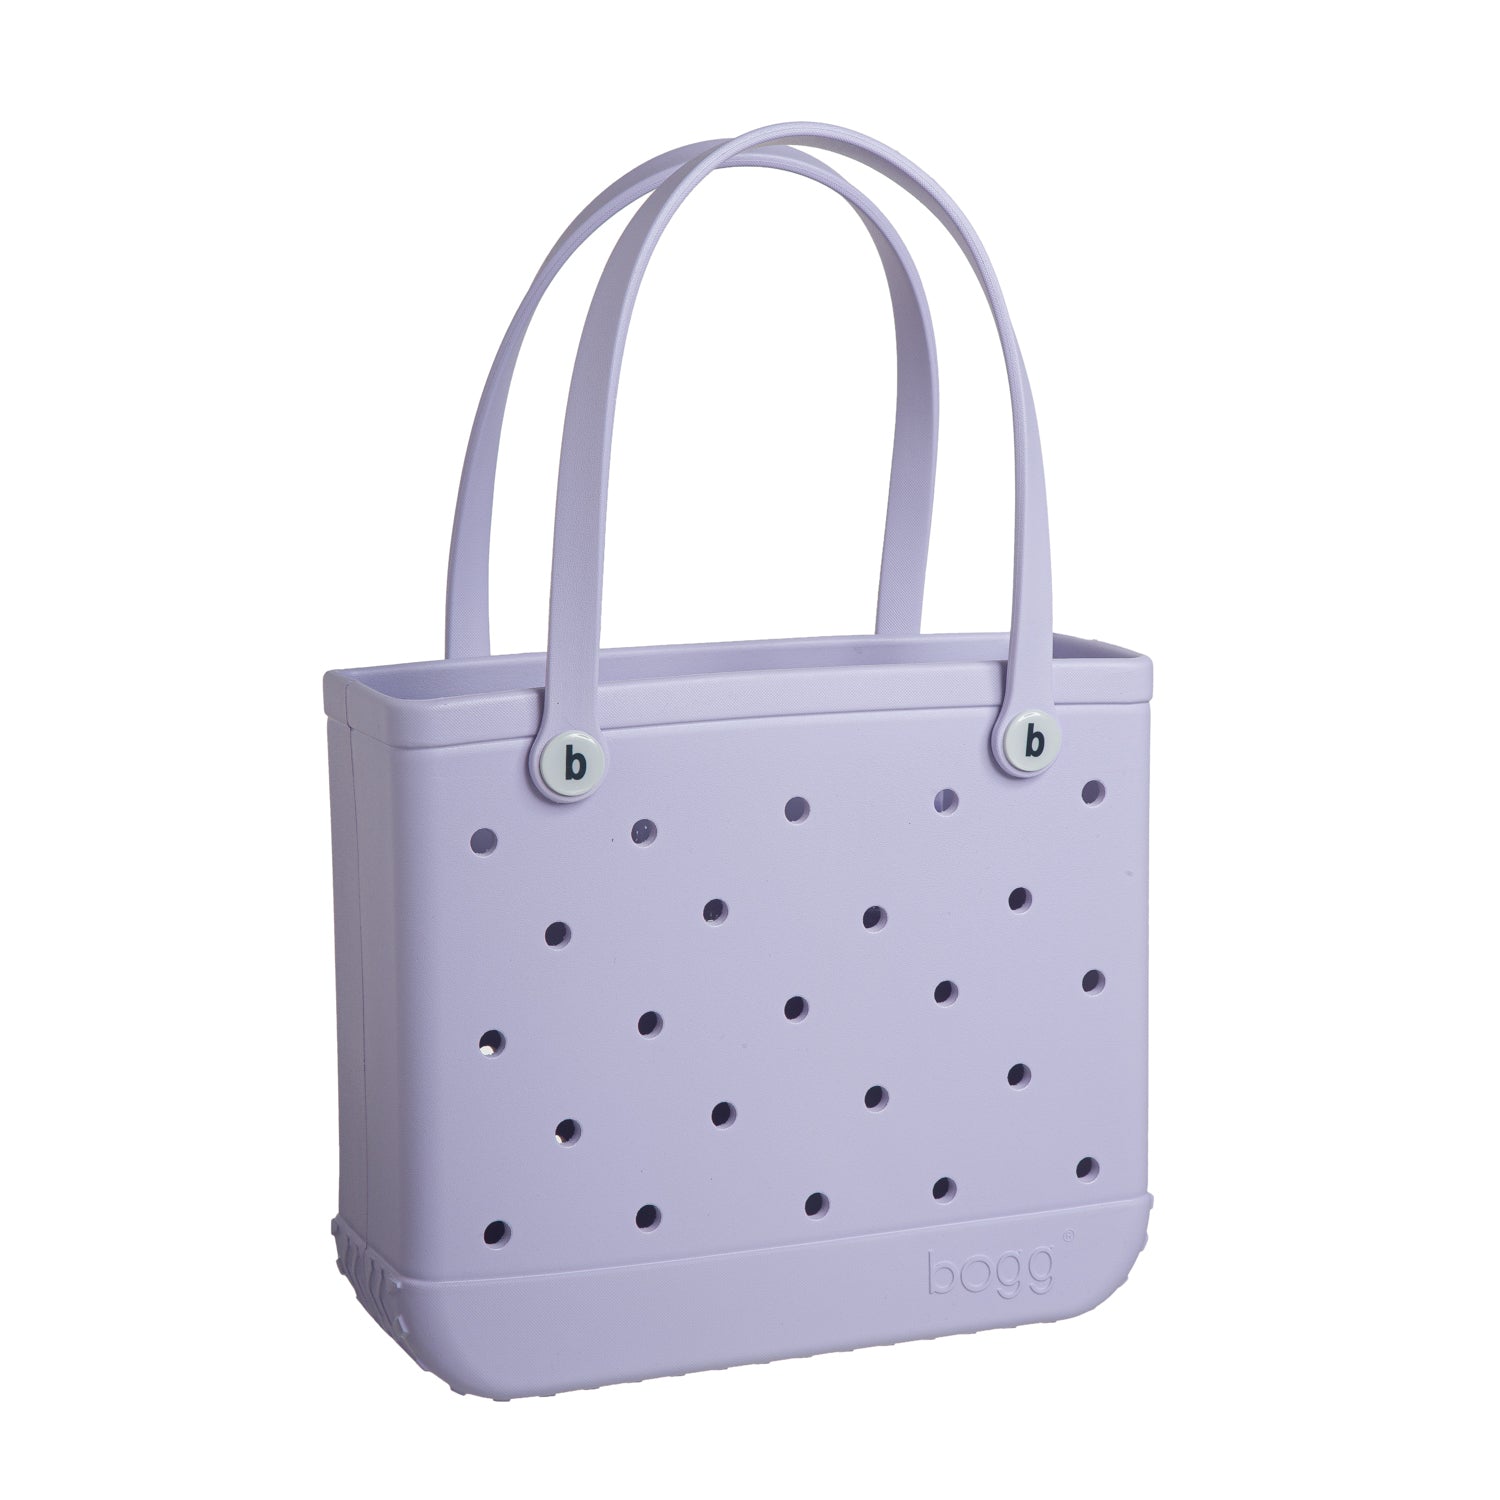 ☘☘☘Hard to Find Original Baby Bogg Bag I lilac You Alot Immediate Ship☘☘☘